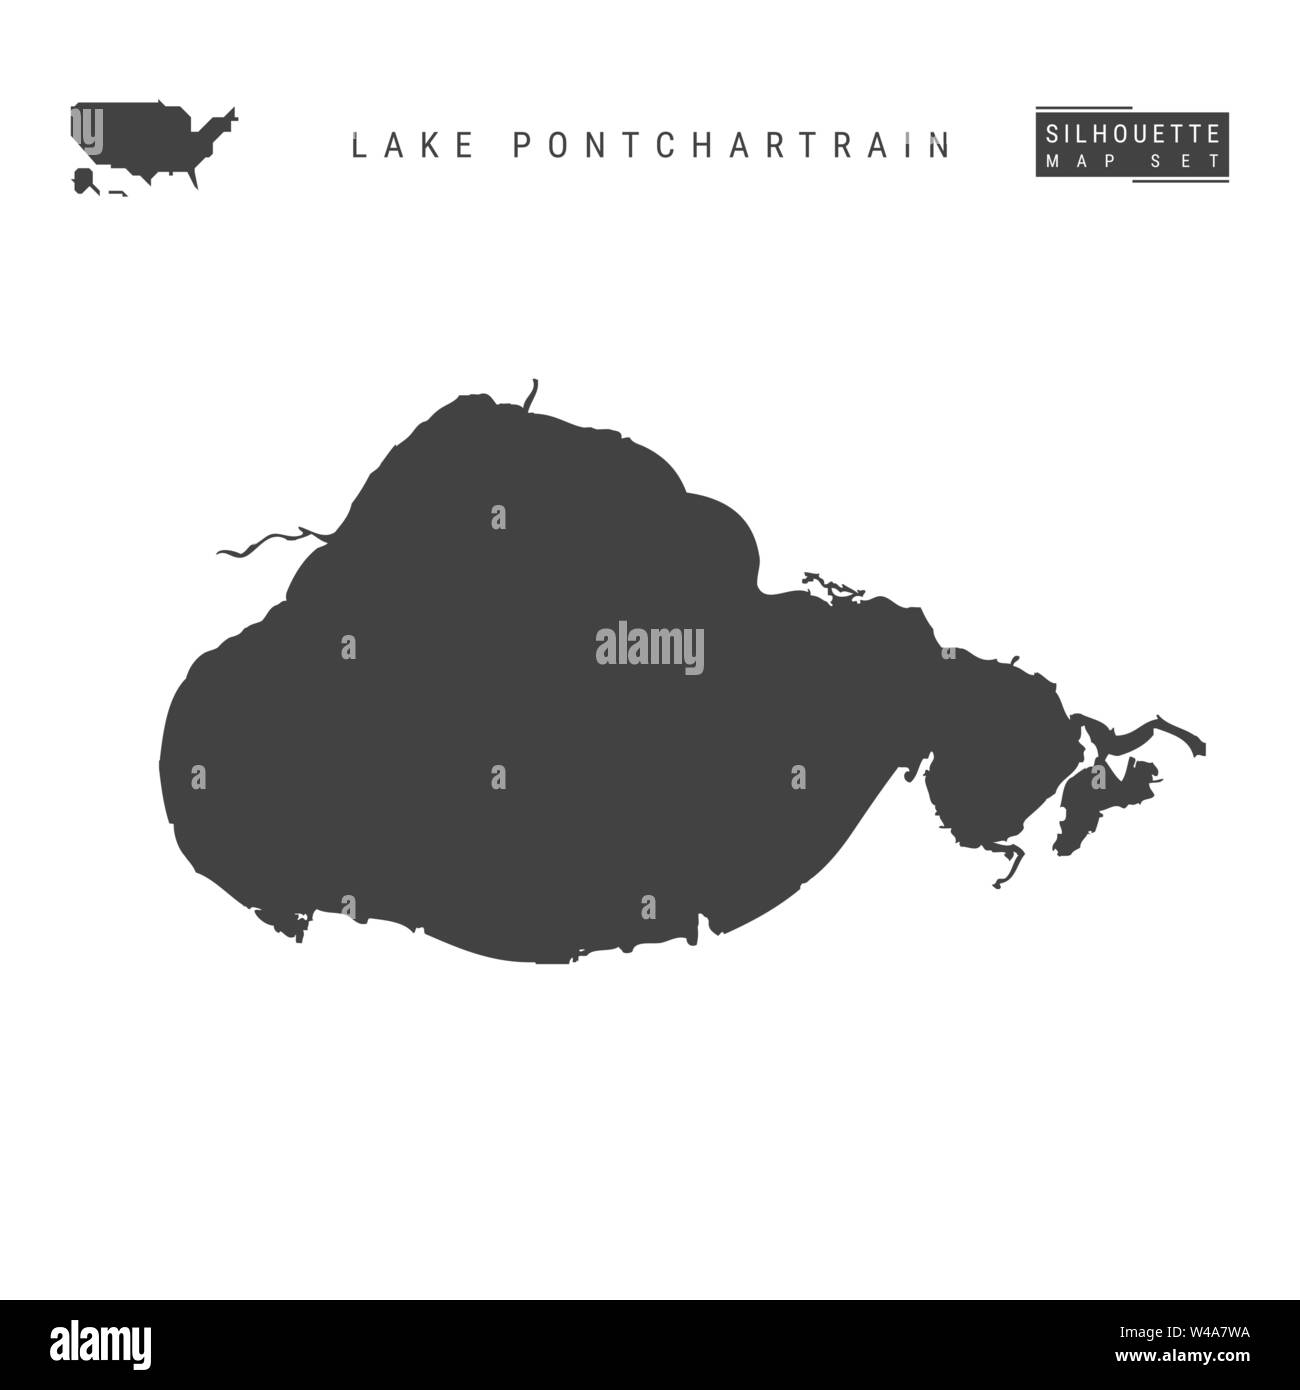 Lake Pontchartrain Louisiana, T-Shirt Small / Navy